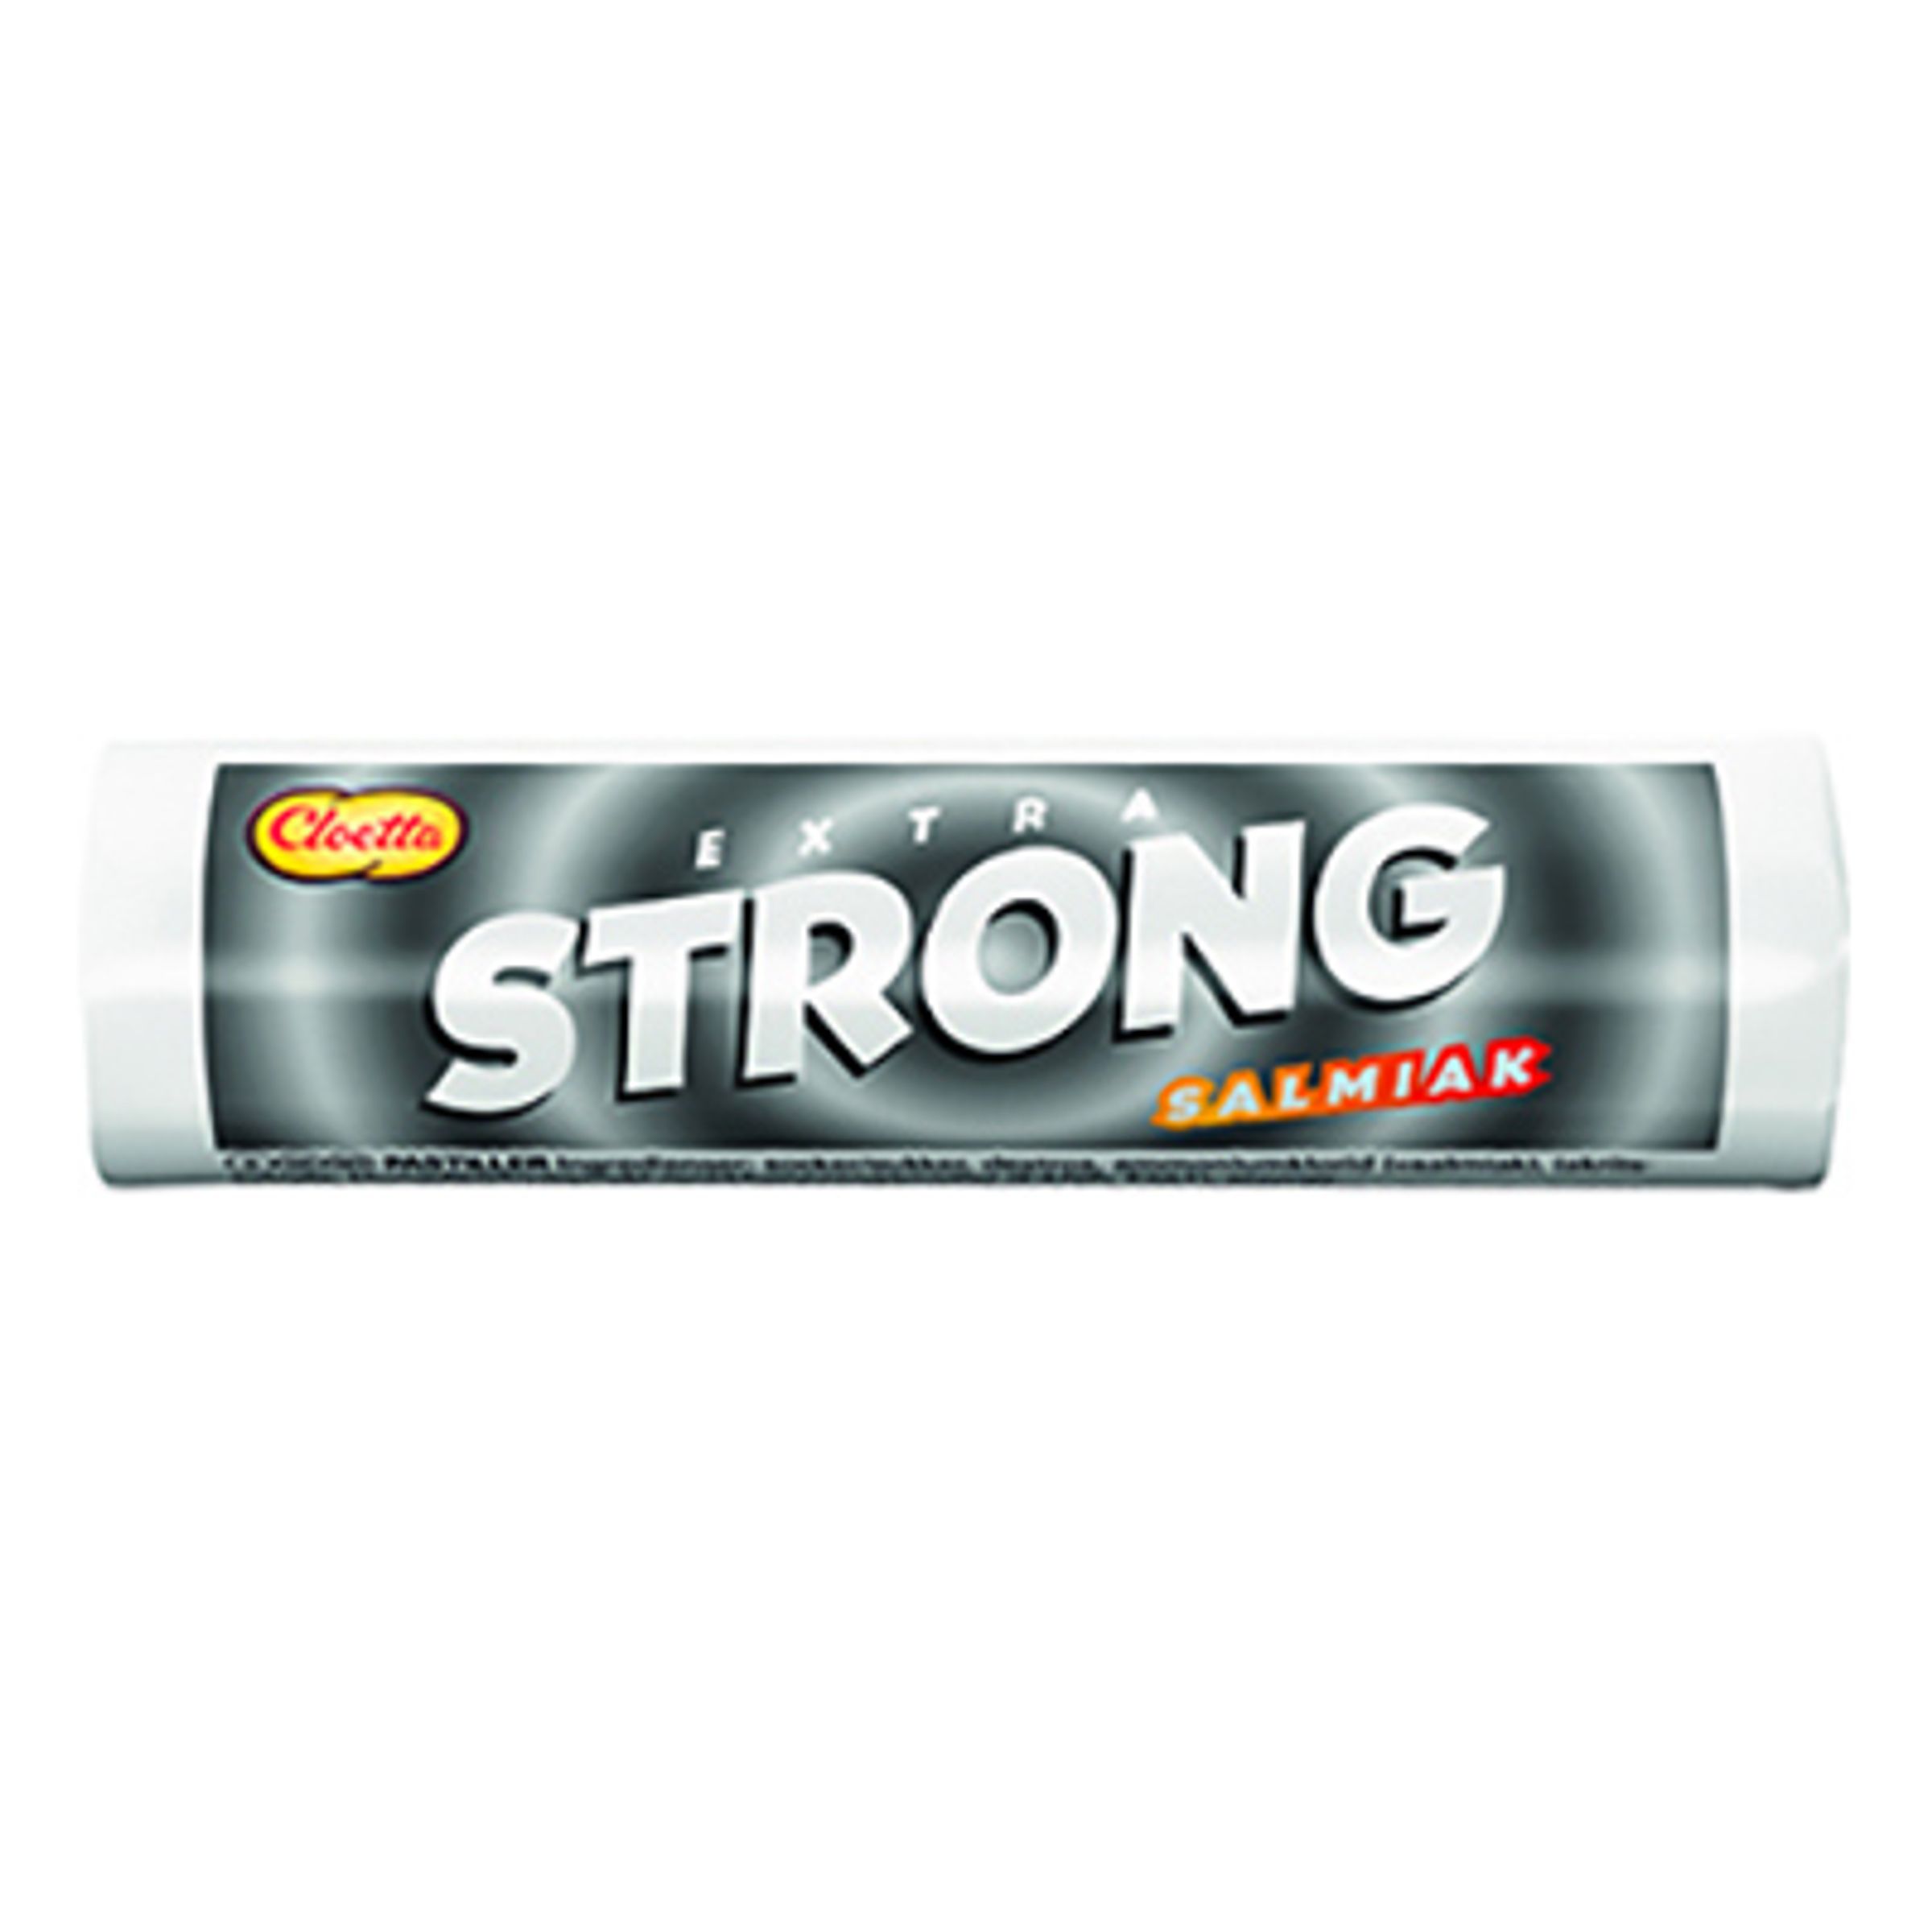 Extra Strong Salmiak - 25 gram